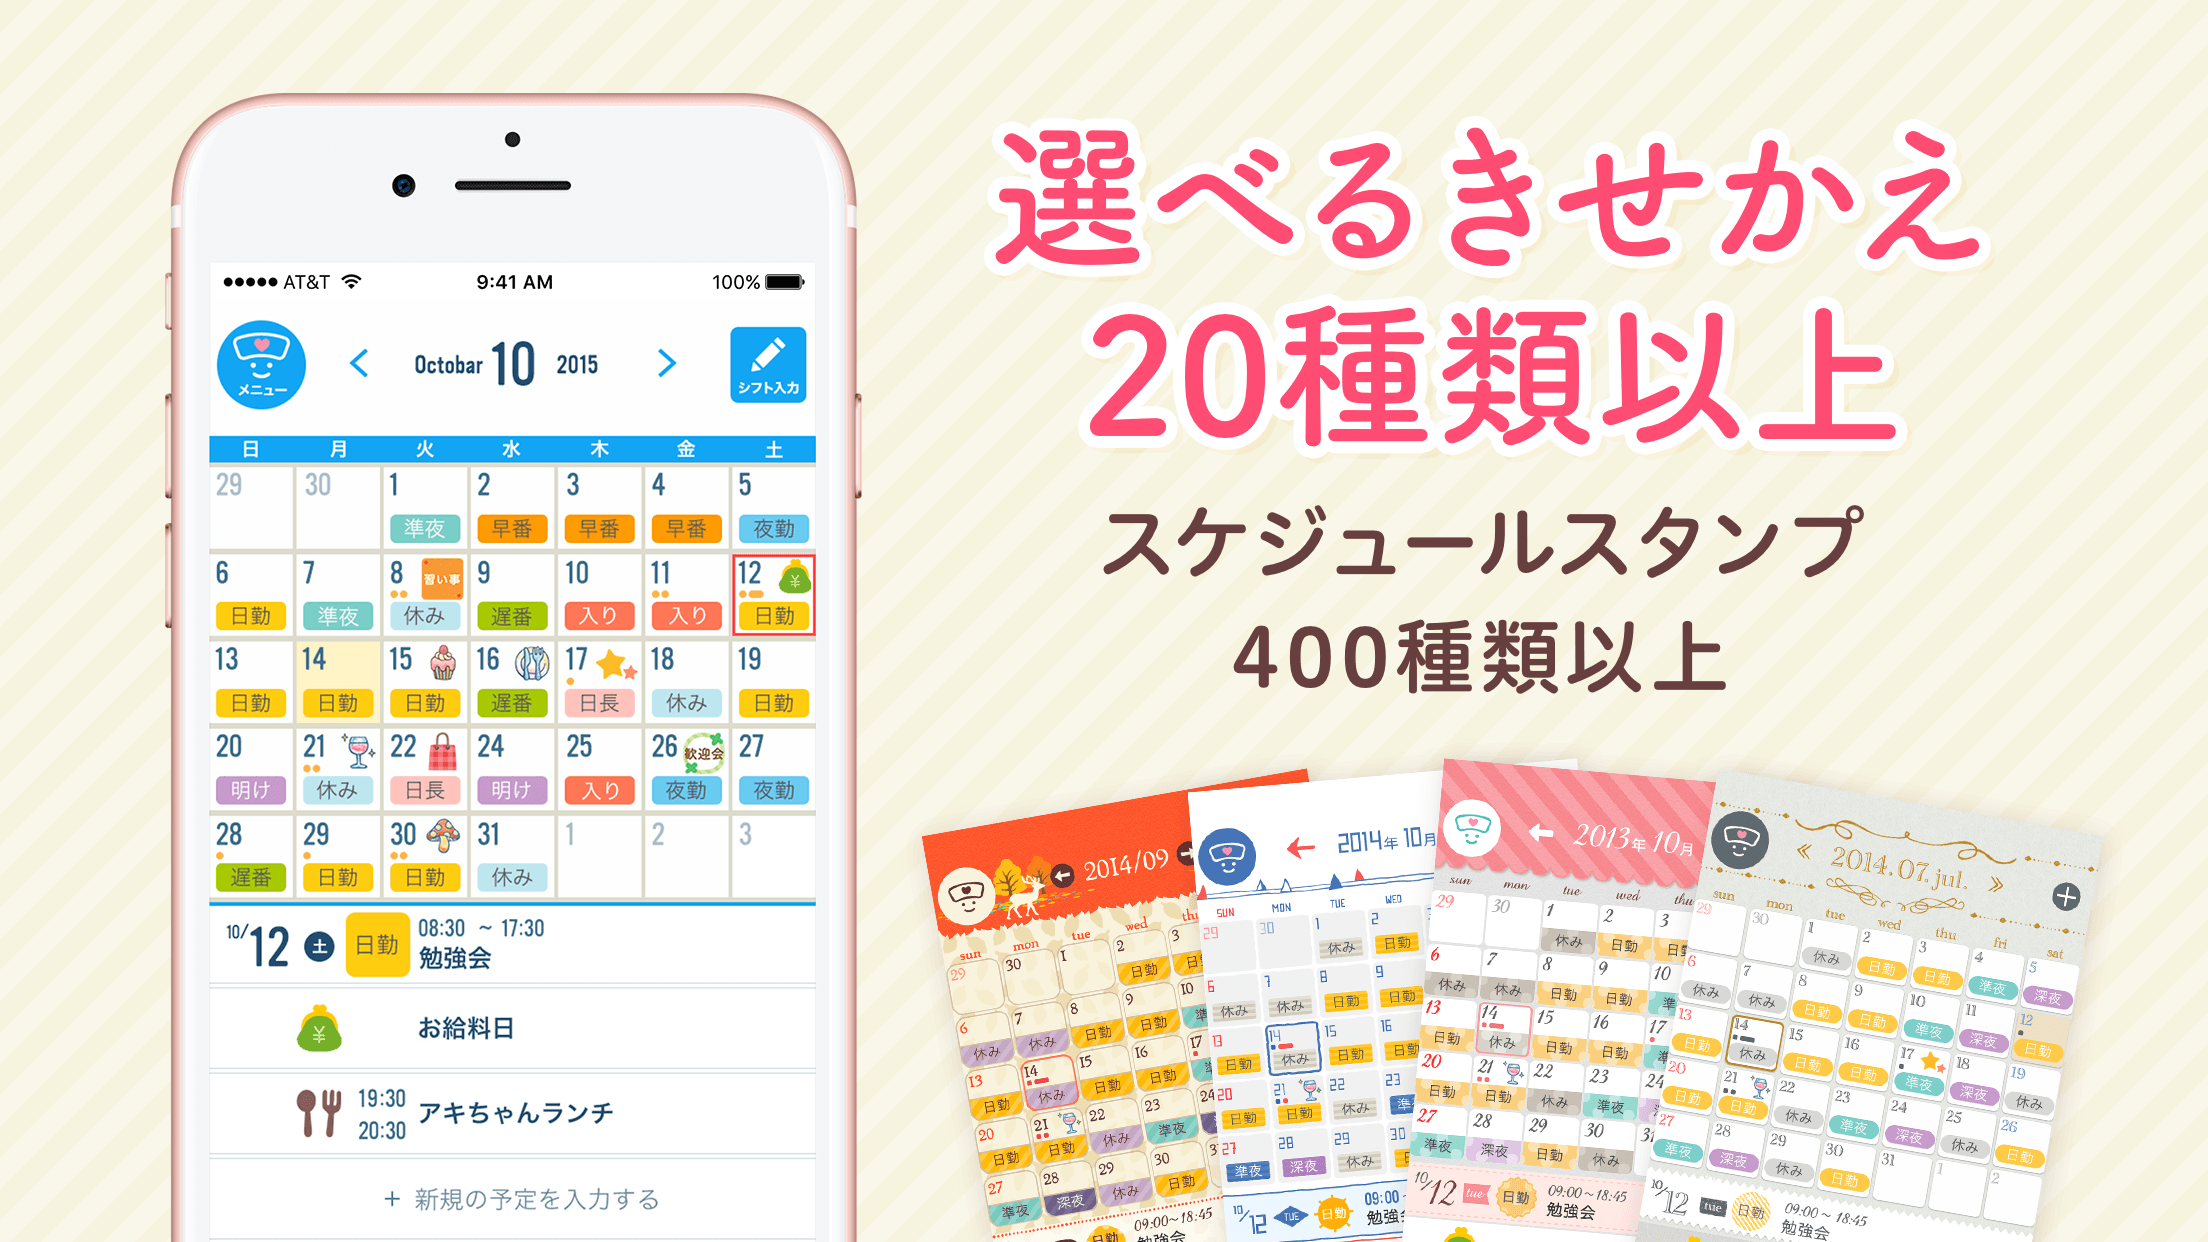 Android application フルル手帳～看護師のシフト管理アプリ～ by ナースフル screenshort